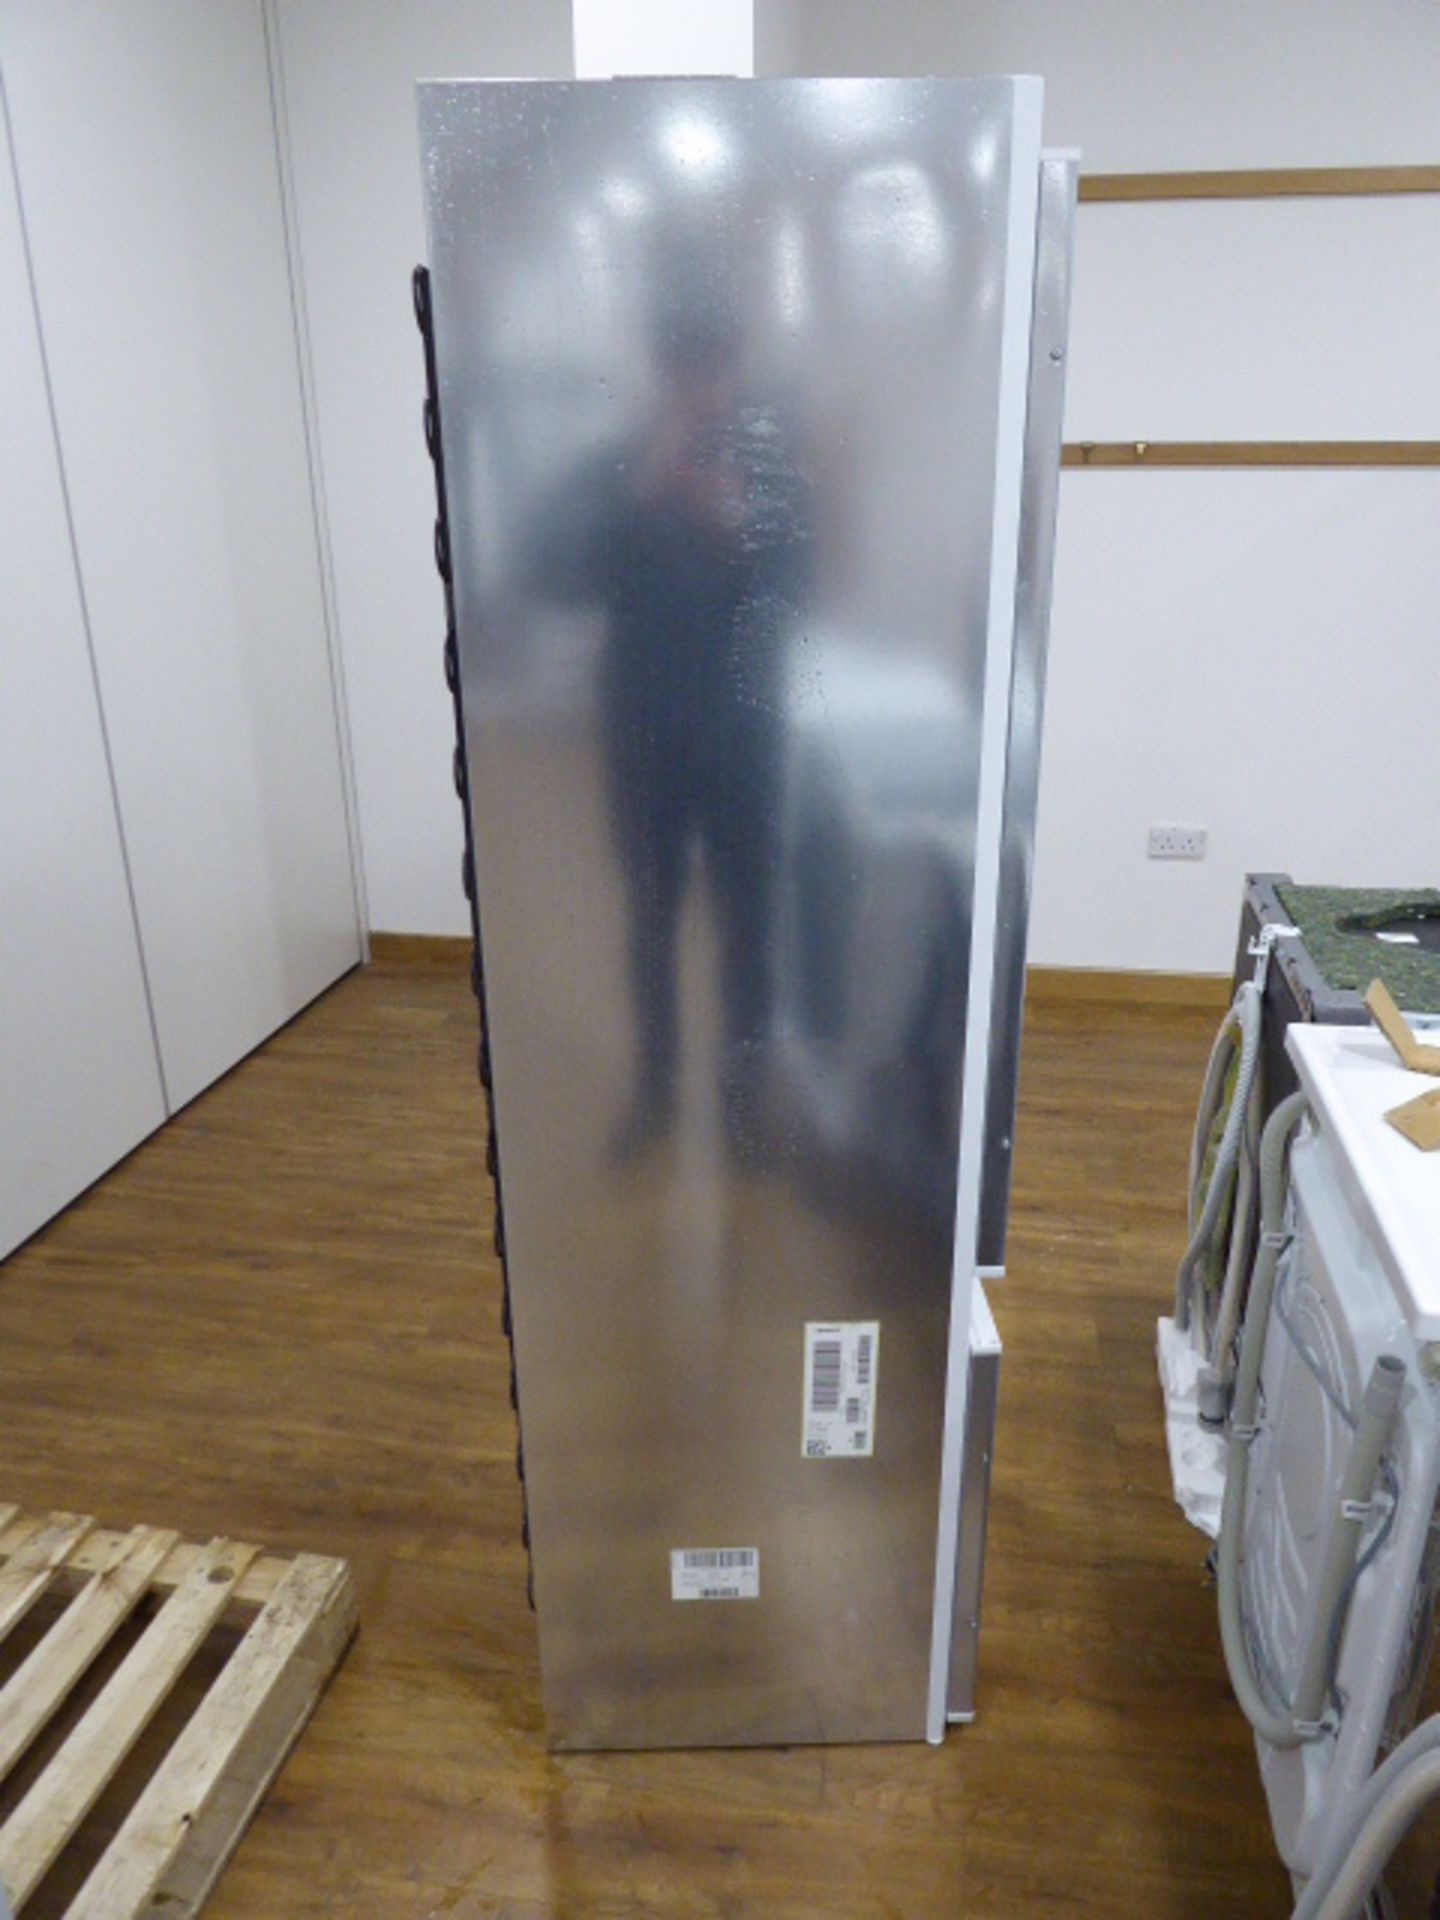 KI87VVSF0GB Siemens Built-in fridge-freezer combination - Image 2 of 7